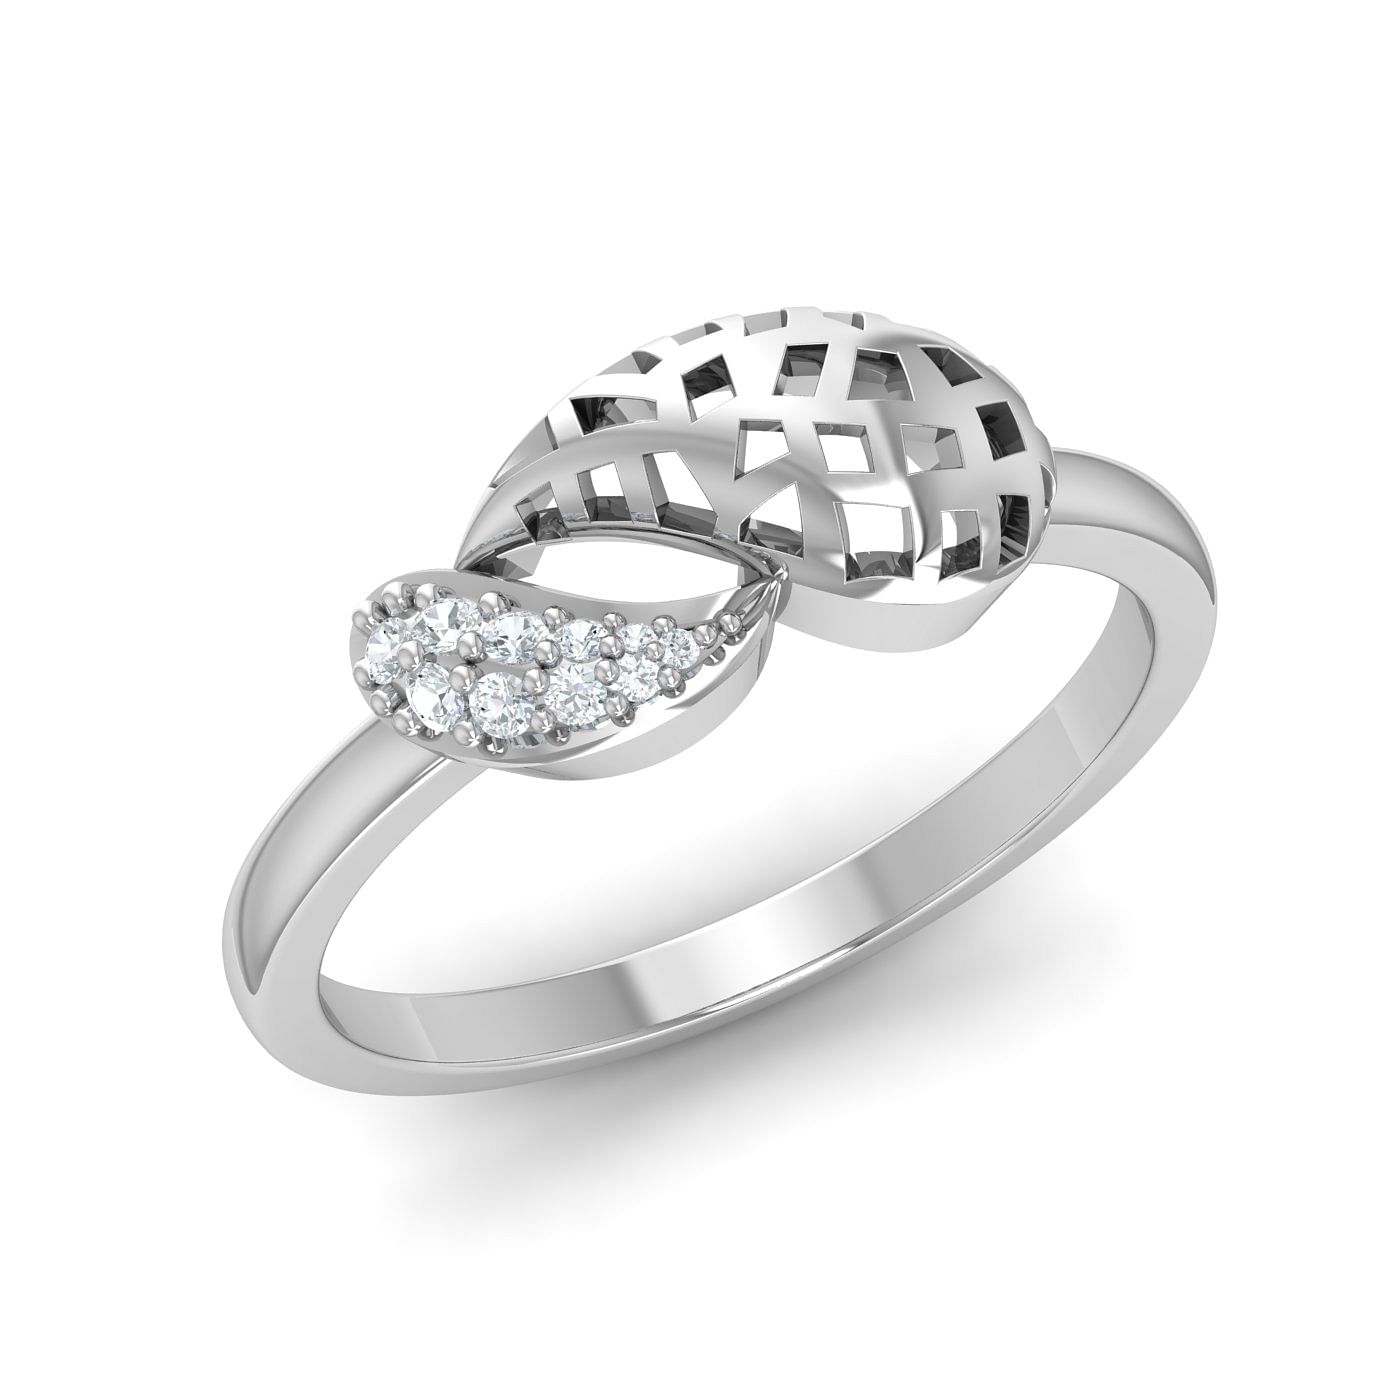 Aadhya Diamond Ring For Women | Modern Style Design Diamond Ring For Women In White Gold